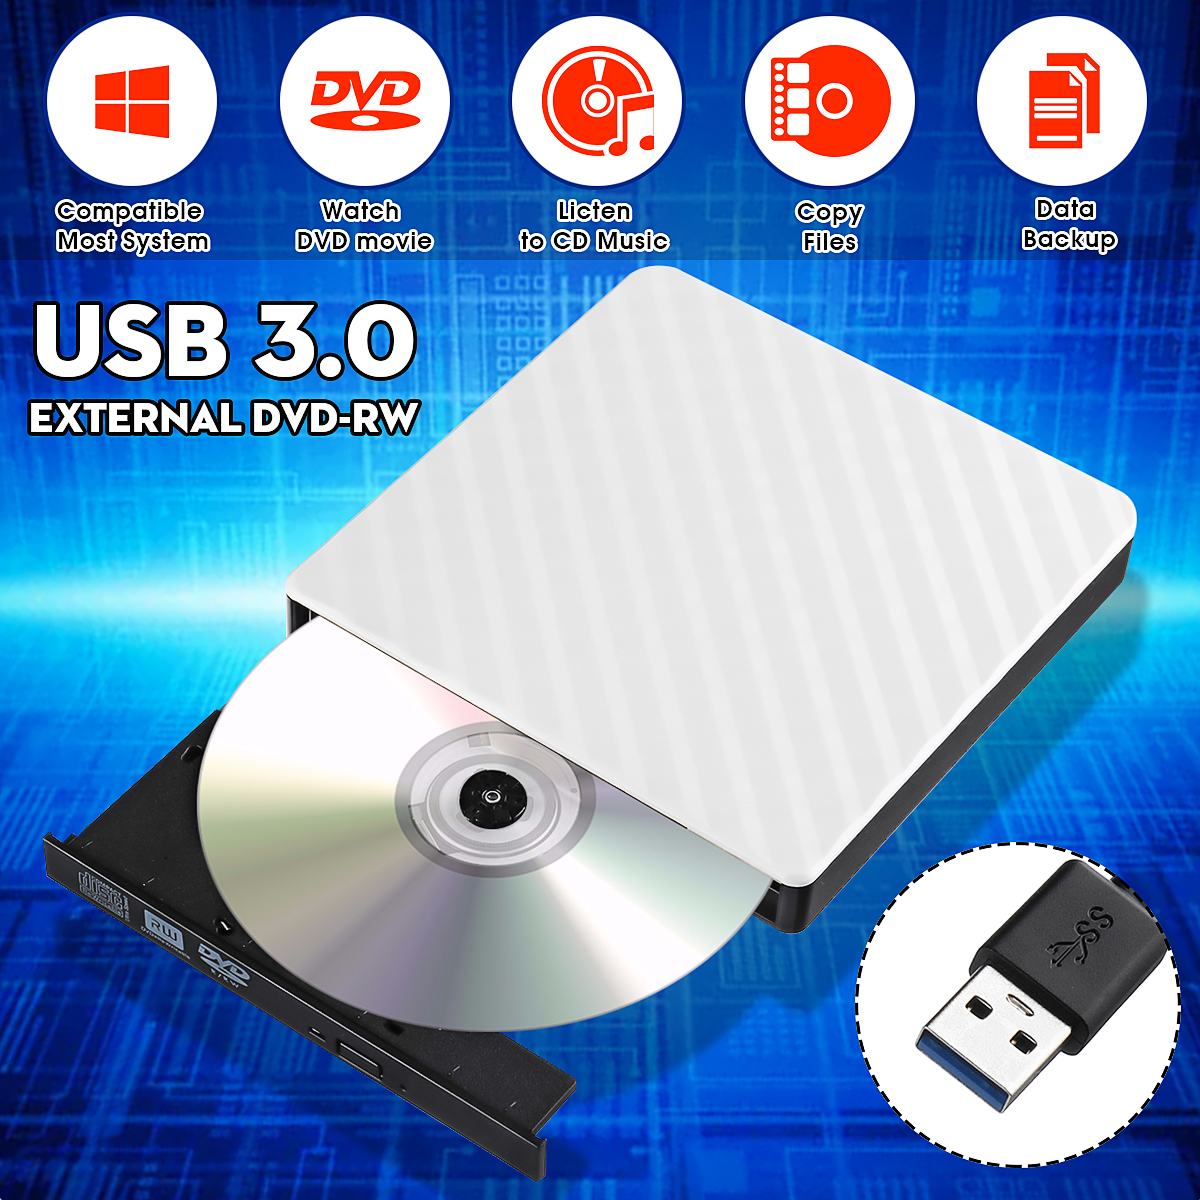 External-USB-30-DVD-RW-CD-Writer-Slim-Carbon-Grain-Drive-Burner-Reader-Player-For-PC-Laptop-Optical--1536013-9